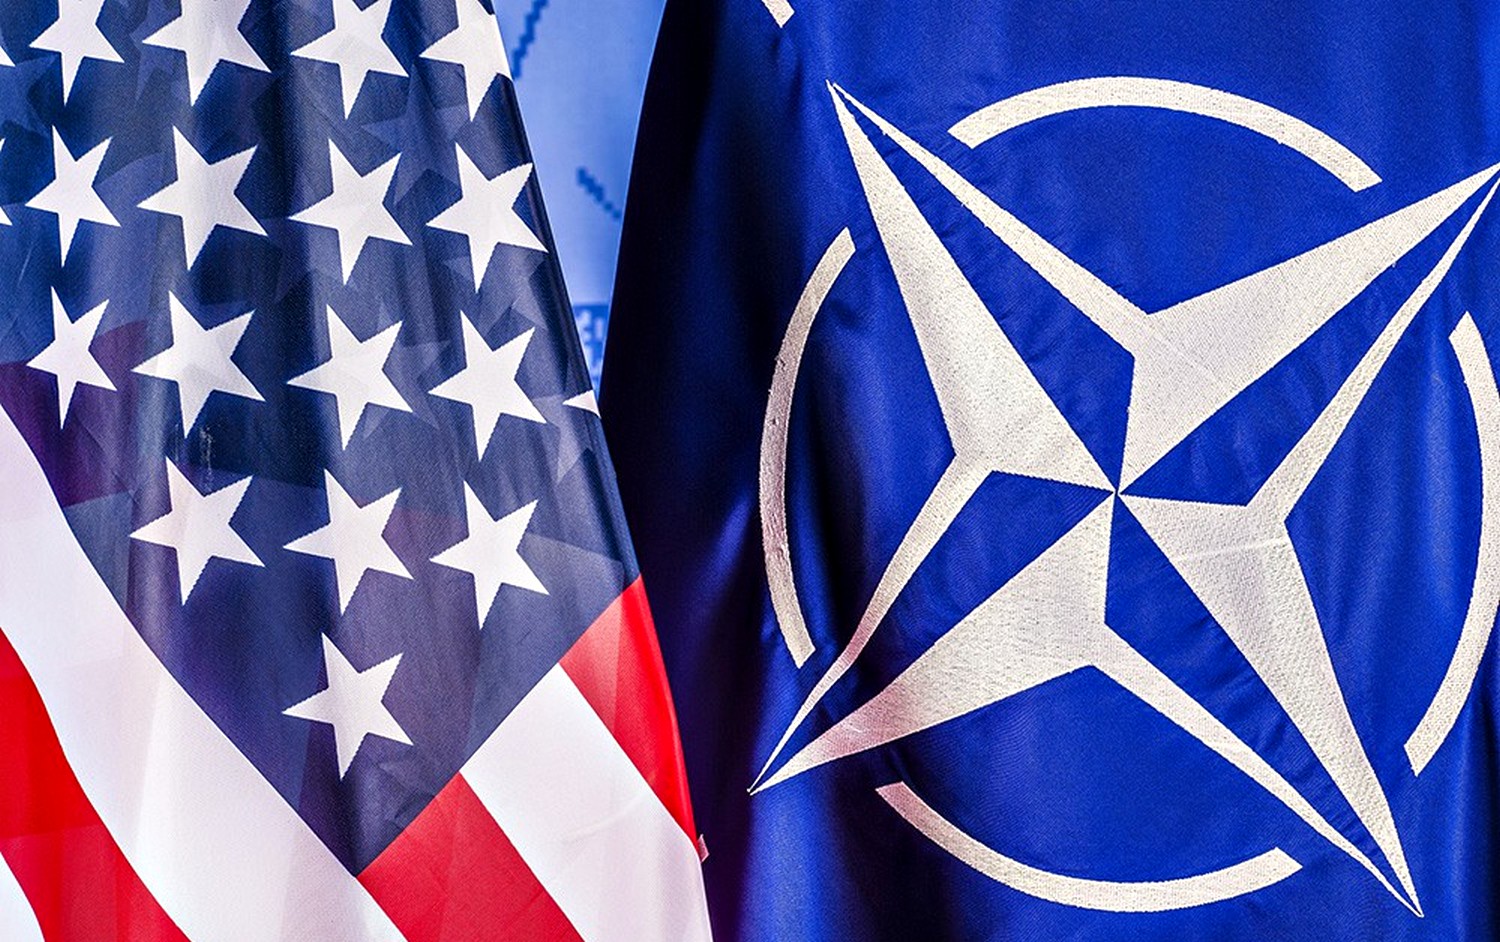 Прапори США і НАТО.